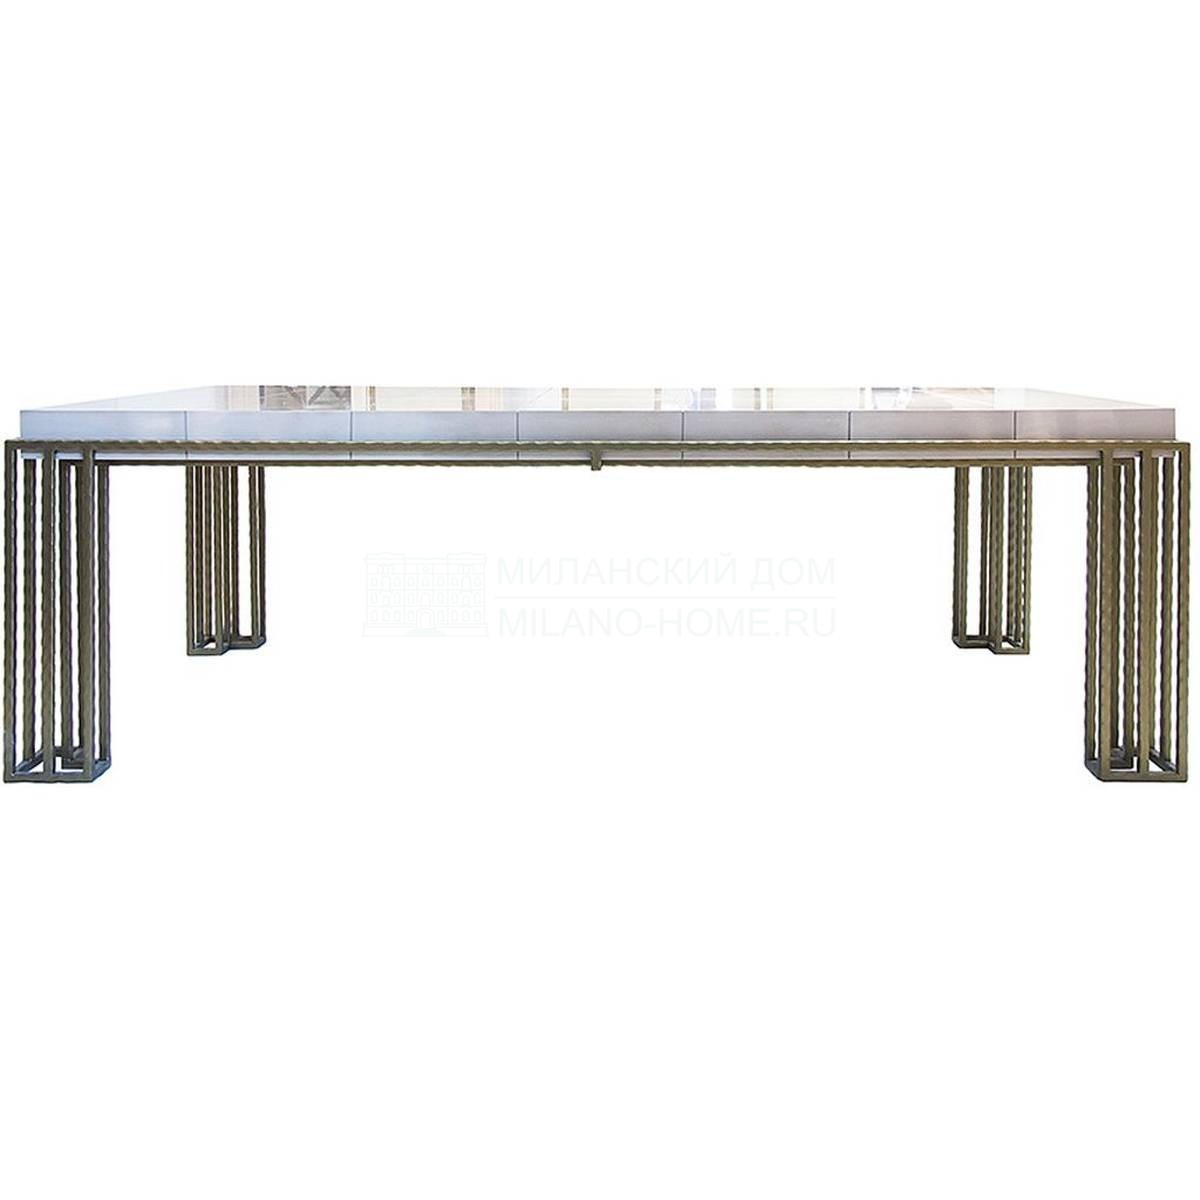 Обеденный стол H-550209 dining table из Испании фабрики GUADARTE